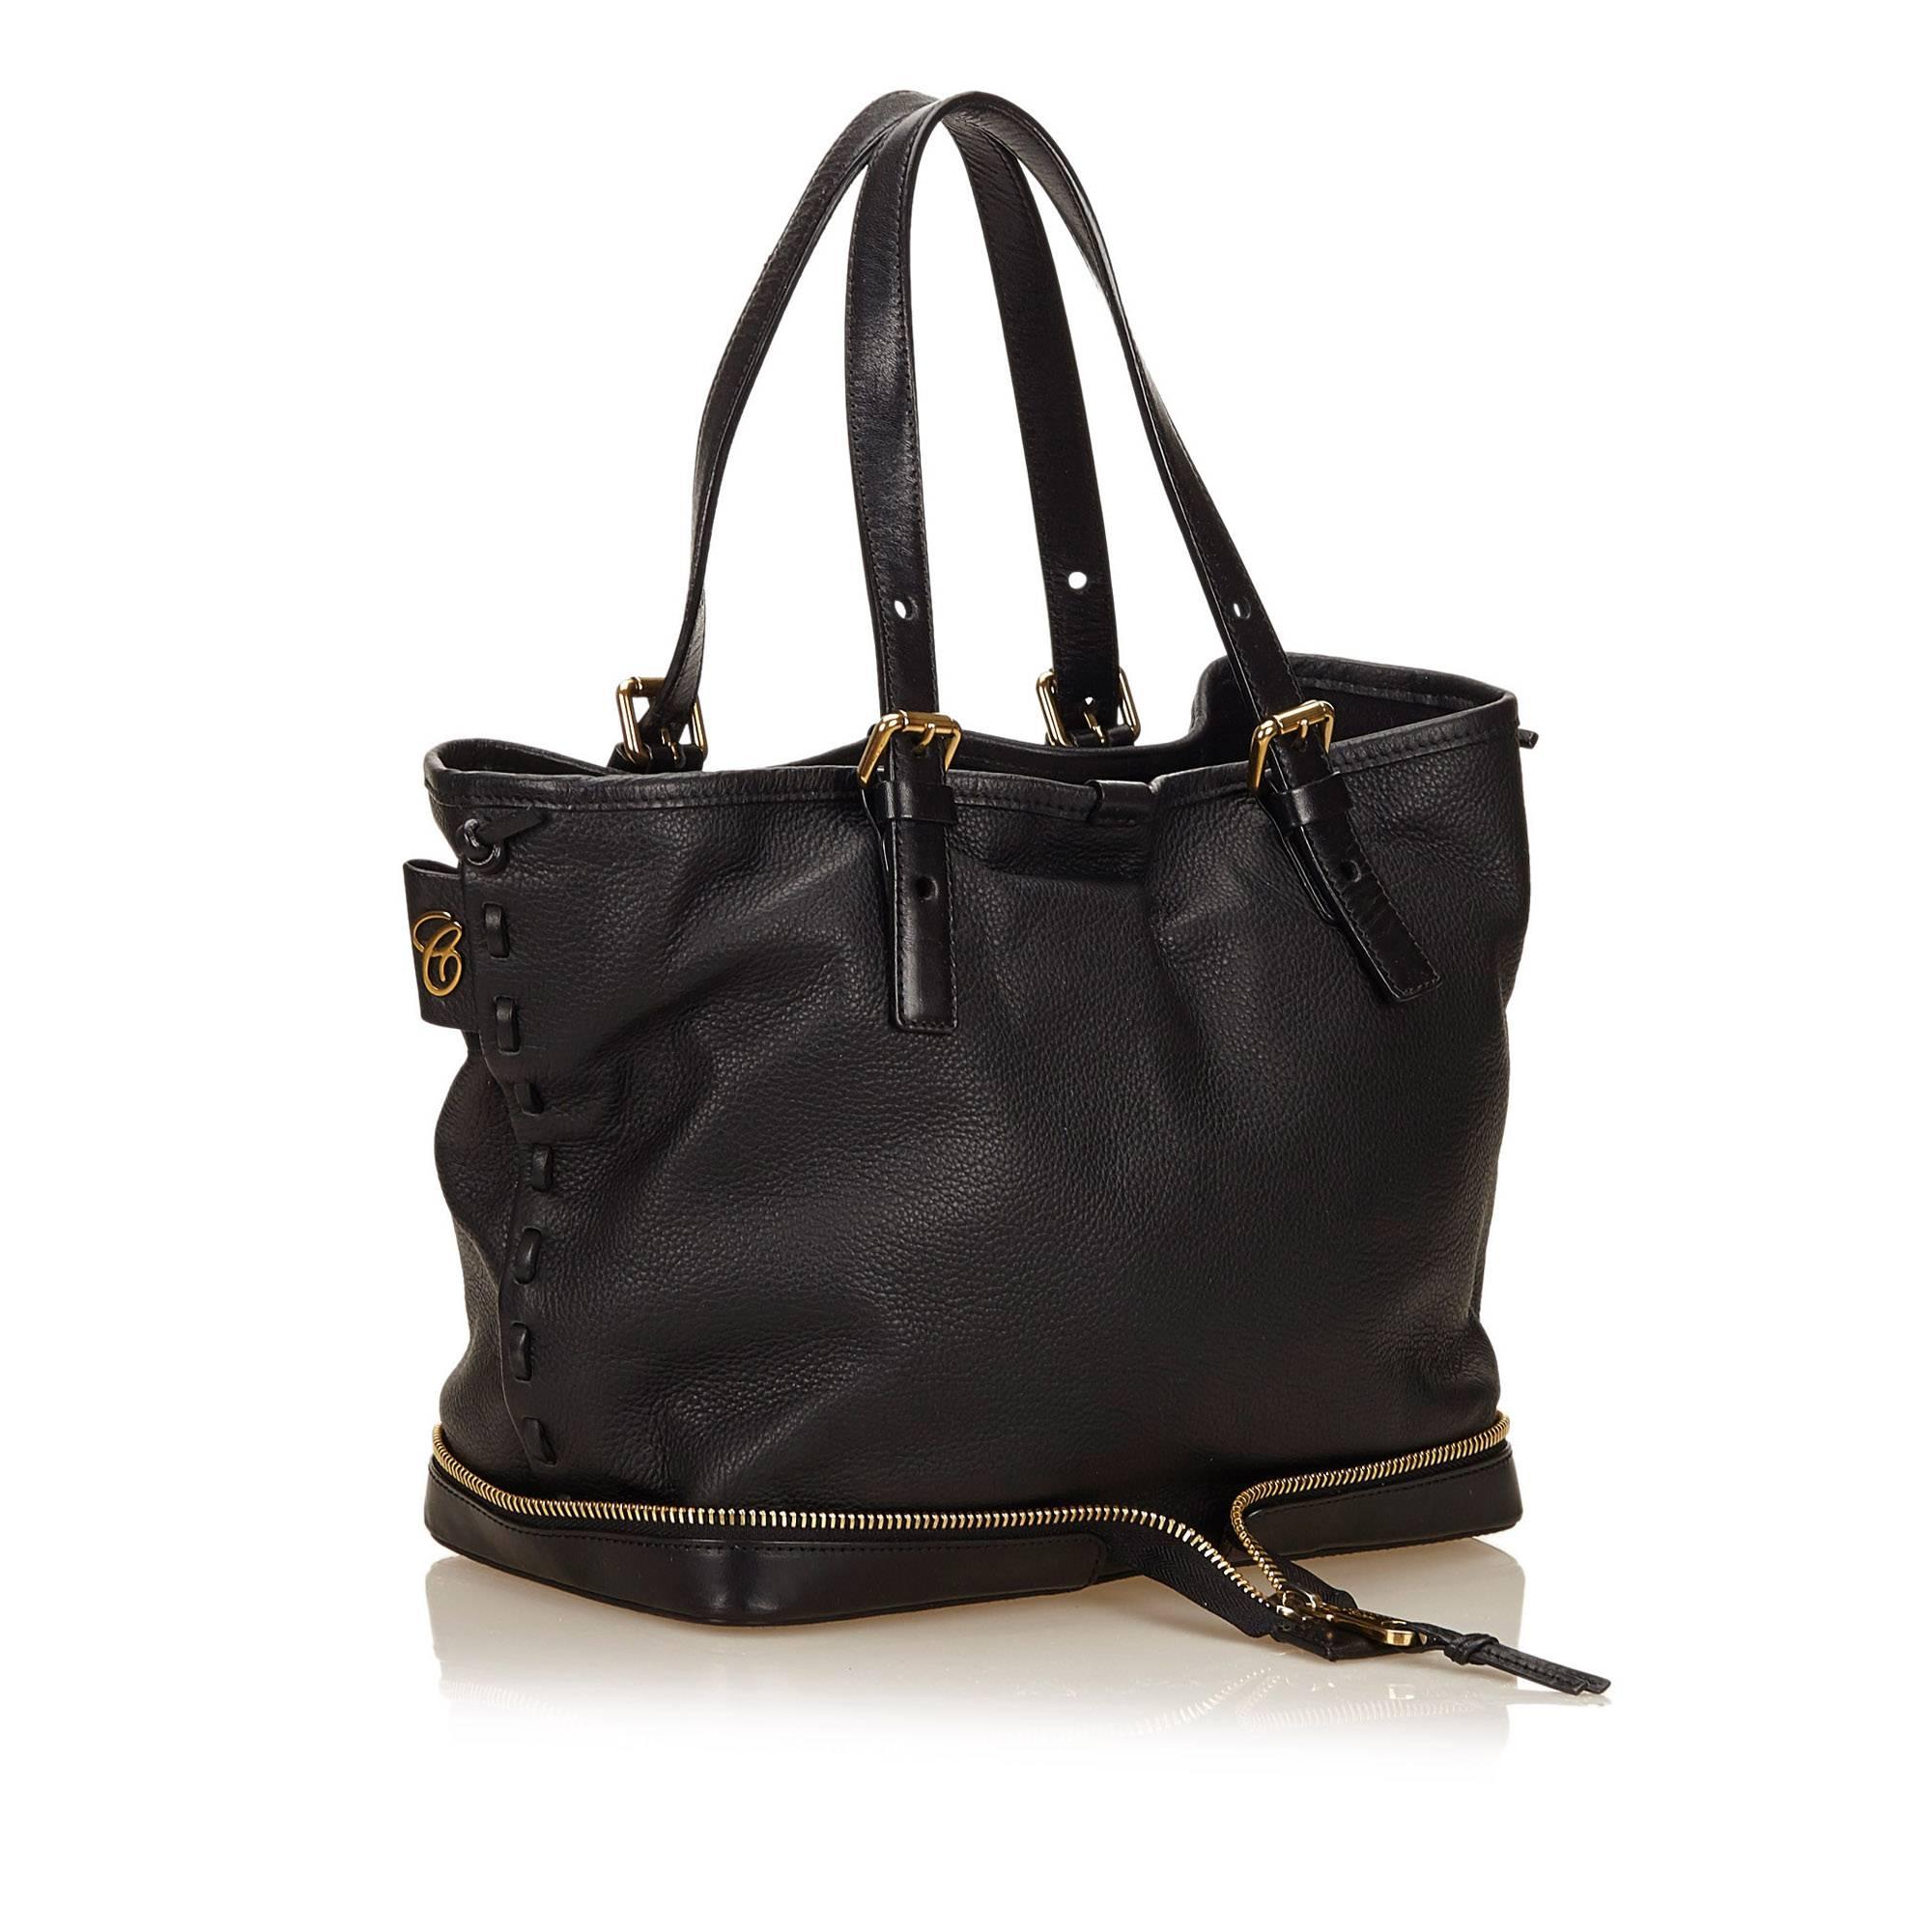 Product details:  Black leather Ellen Moyen tote bag by Chloé.  Dual shoulder straps.  Lined interior with inner zip and slide pockets.  Whipstitched sides.  Zipper placket trims base.  Goldtone hardware.  25